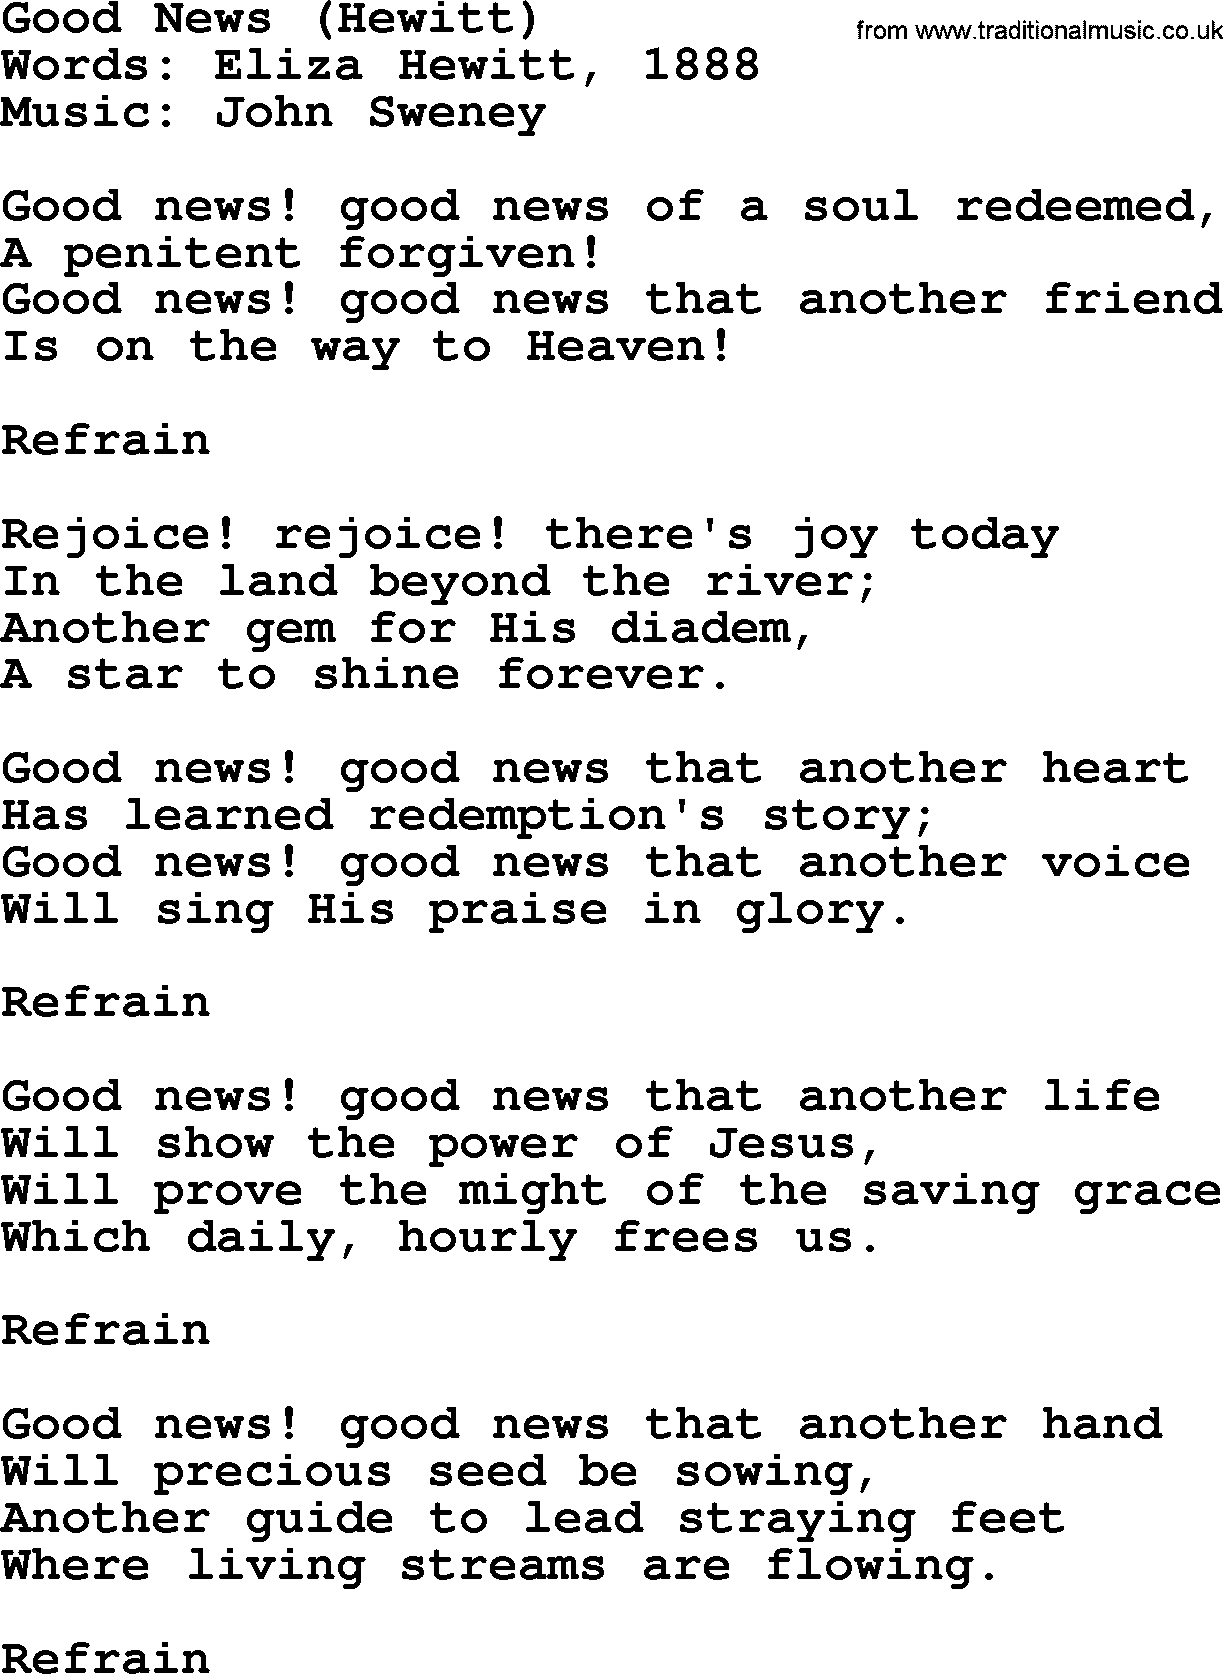 Forgiveness hymns, Hymn: Good News (Hewitt), lyrics with PDF